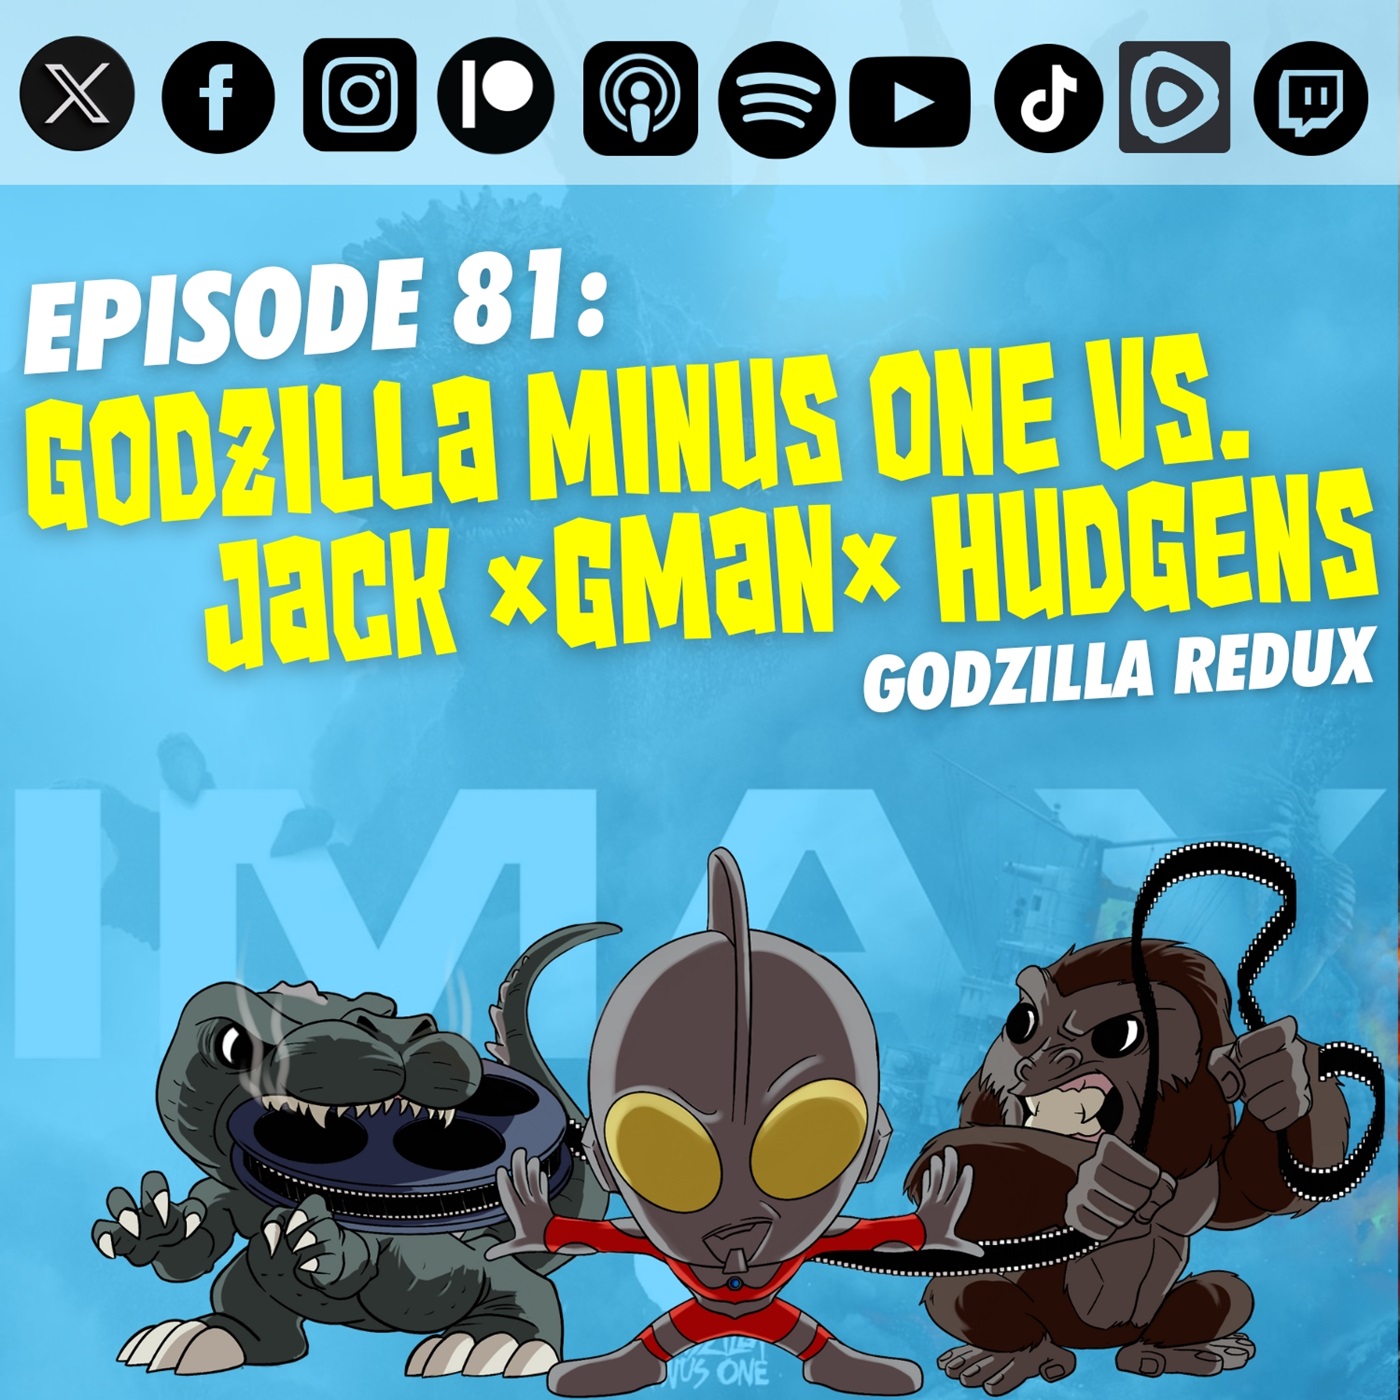 Episode 81: ‘Godzilla Minus One’ vs. Jack ‘GMan’ Hudgens